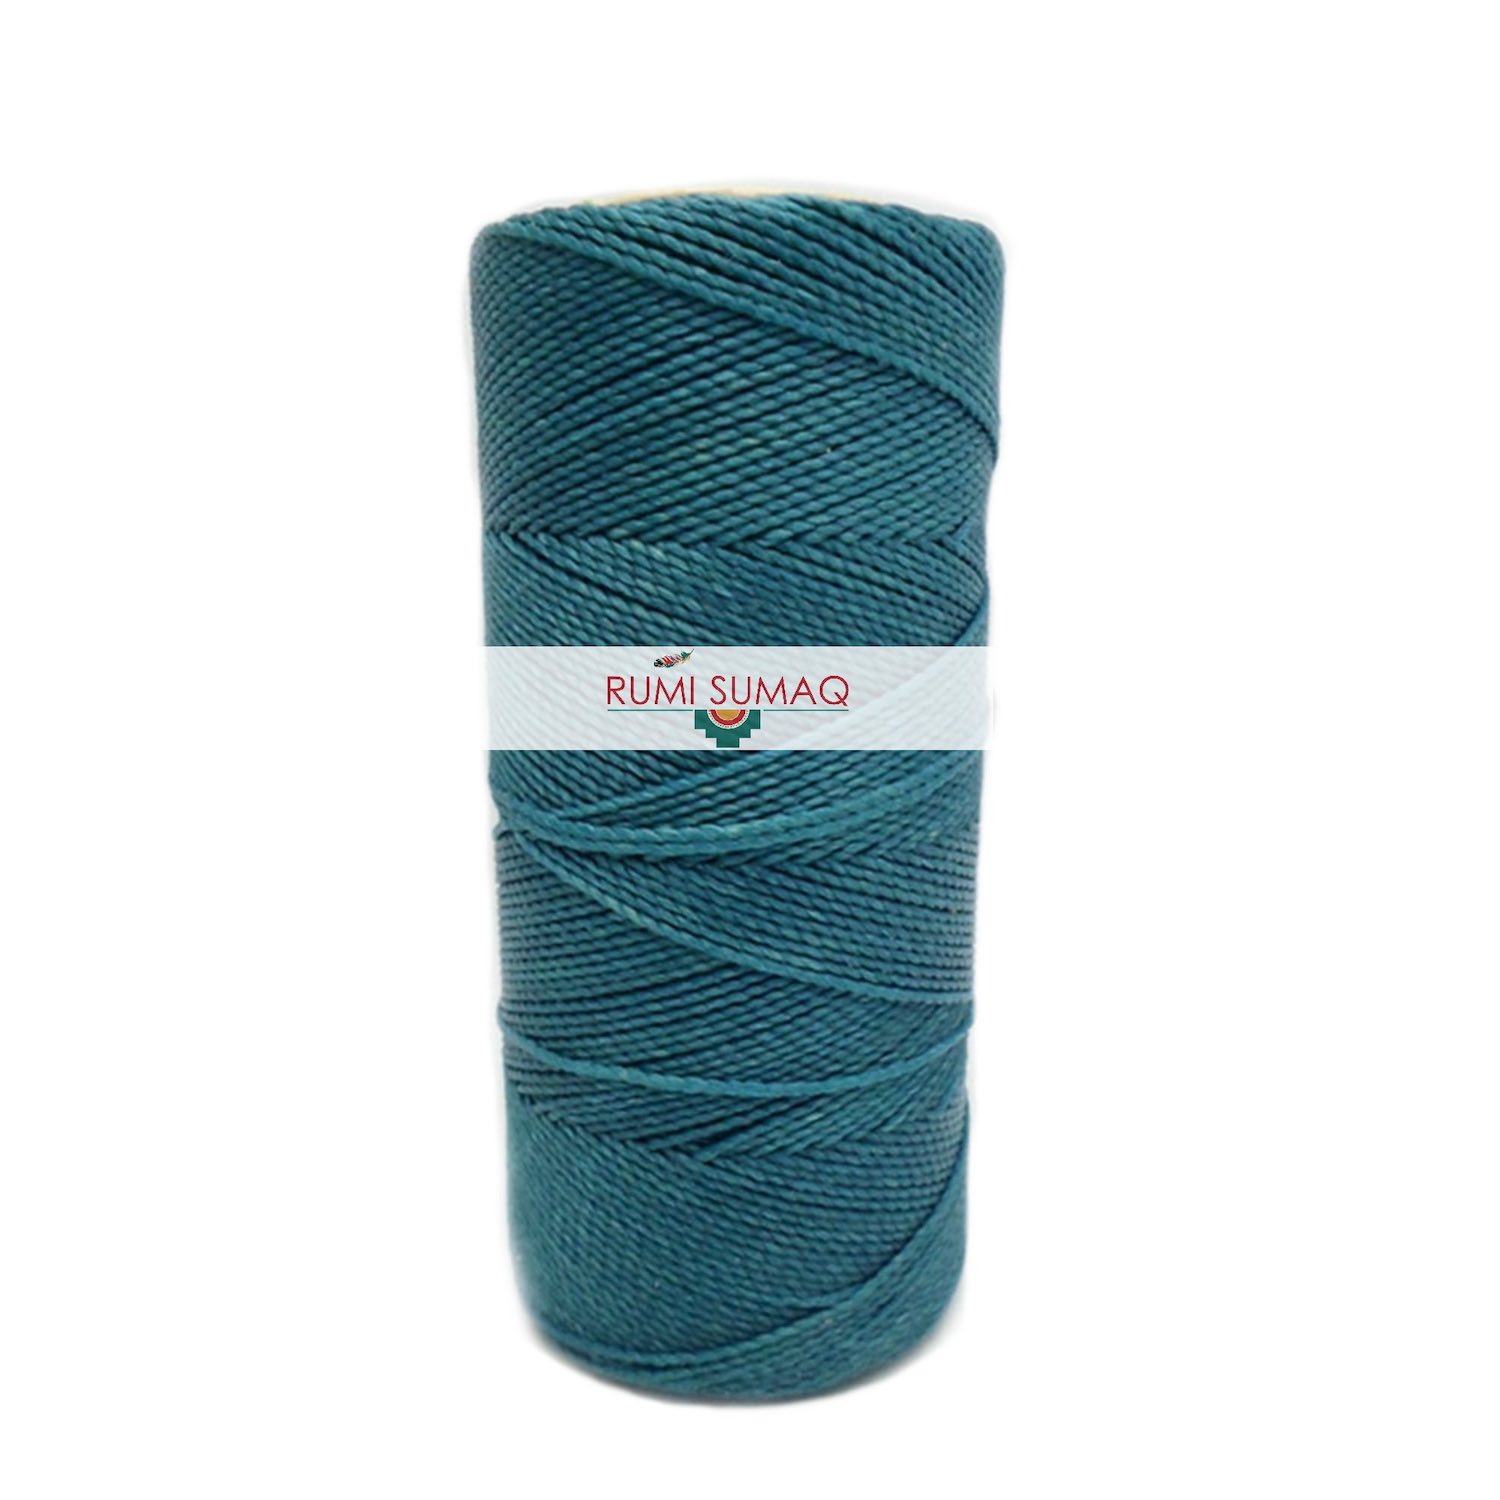 Linhasita 228 Turquoise Blue 1mm Waxed Polyester Cord | RUMI SUMAQ